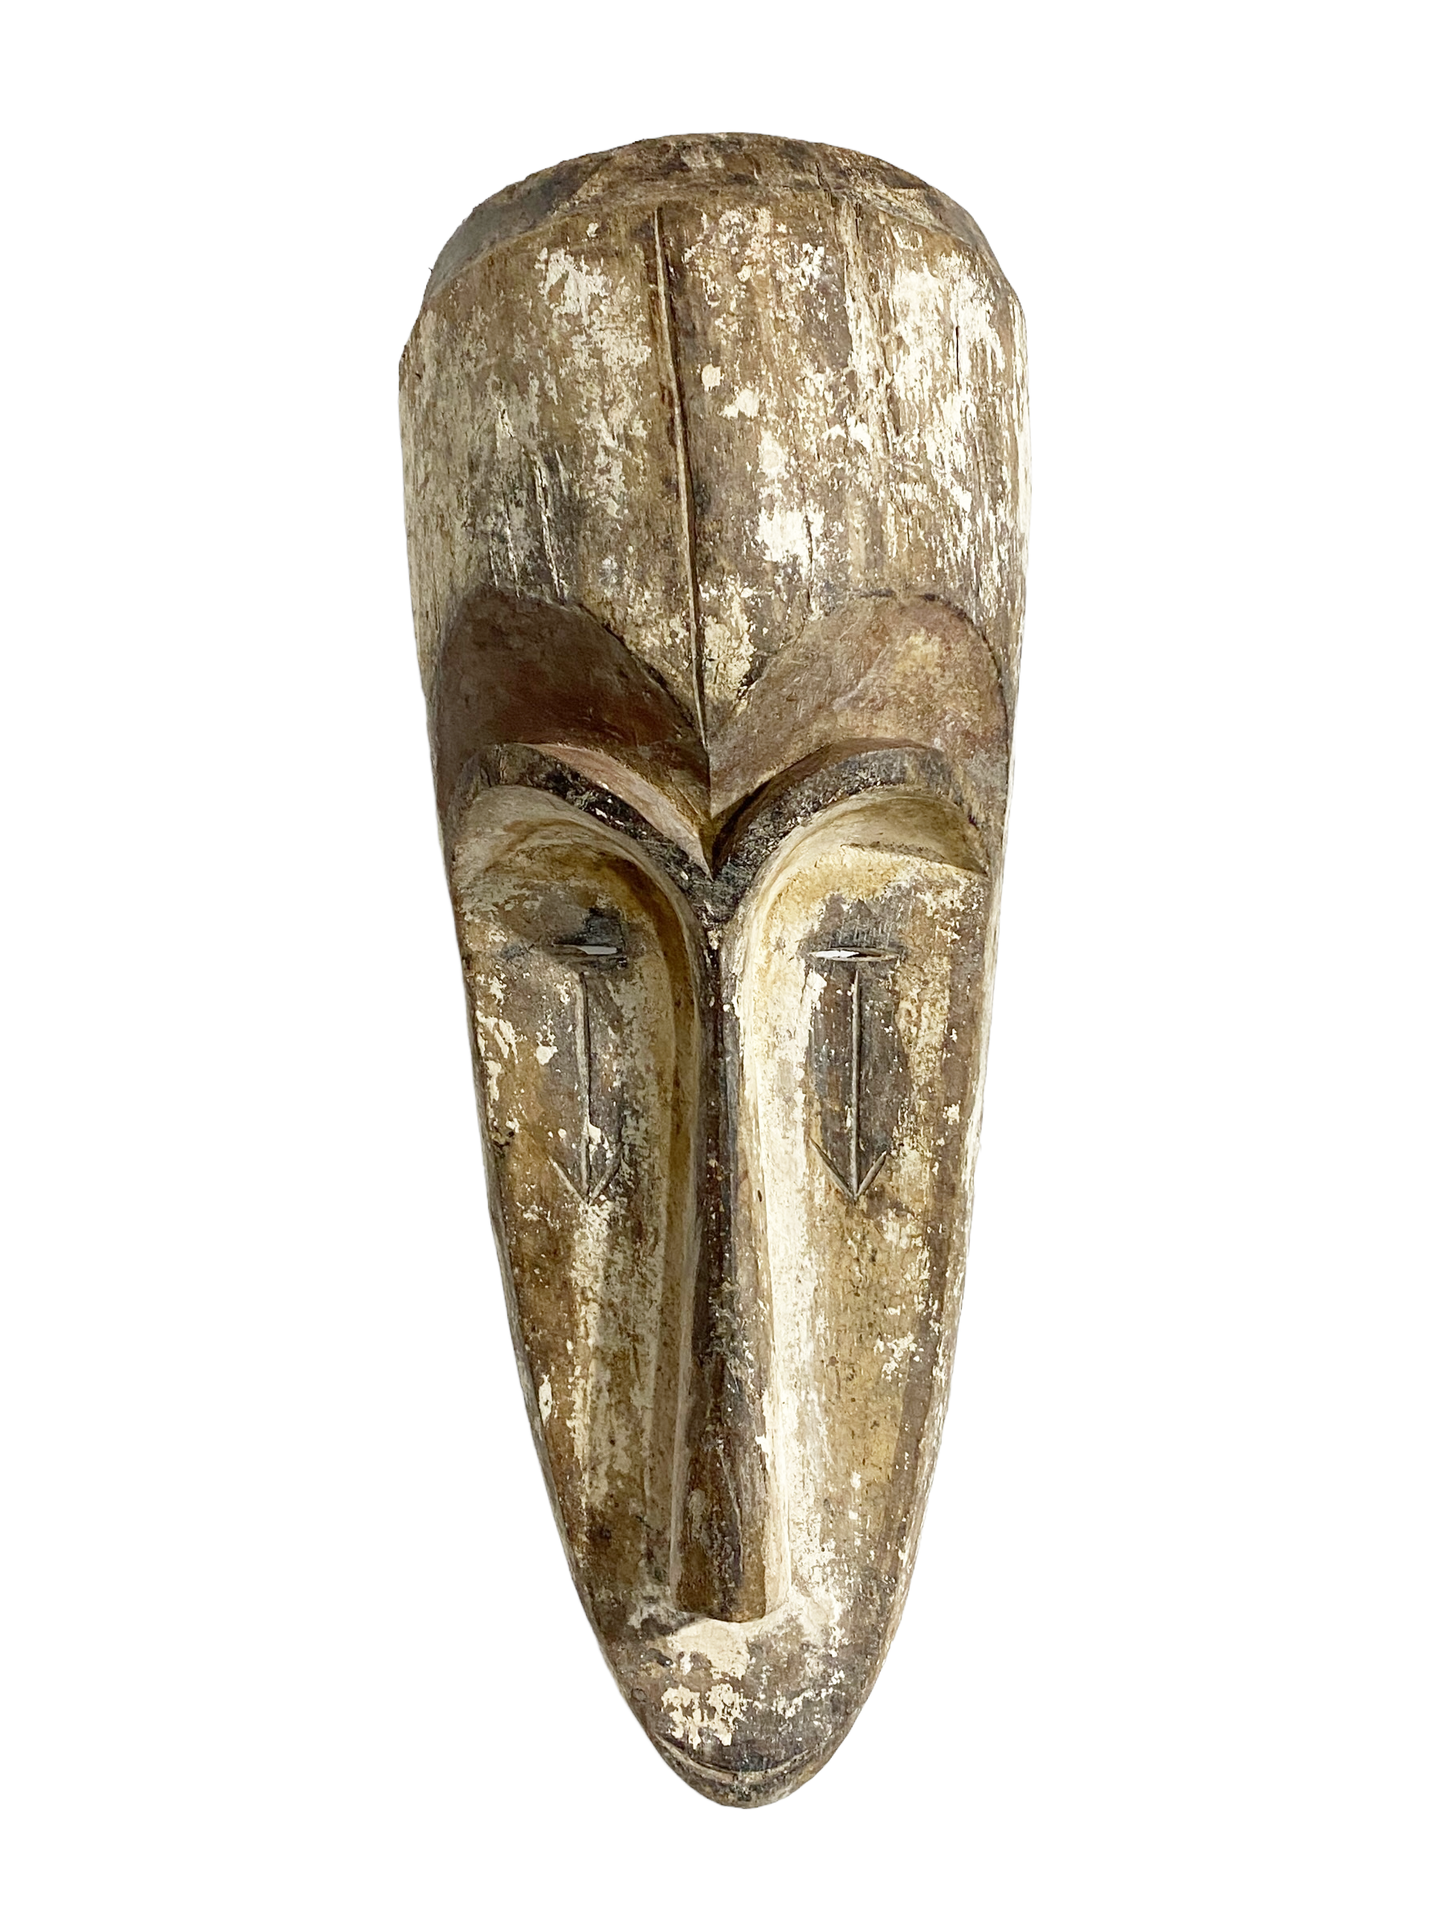 # 3575 Old Fang Mask Elongated Face Gabon African Mask 21.5" H